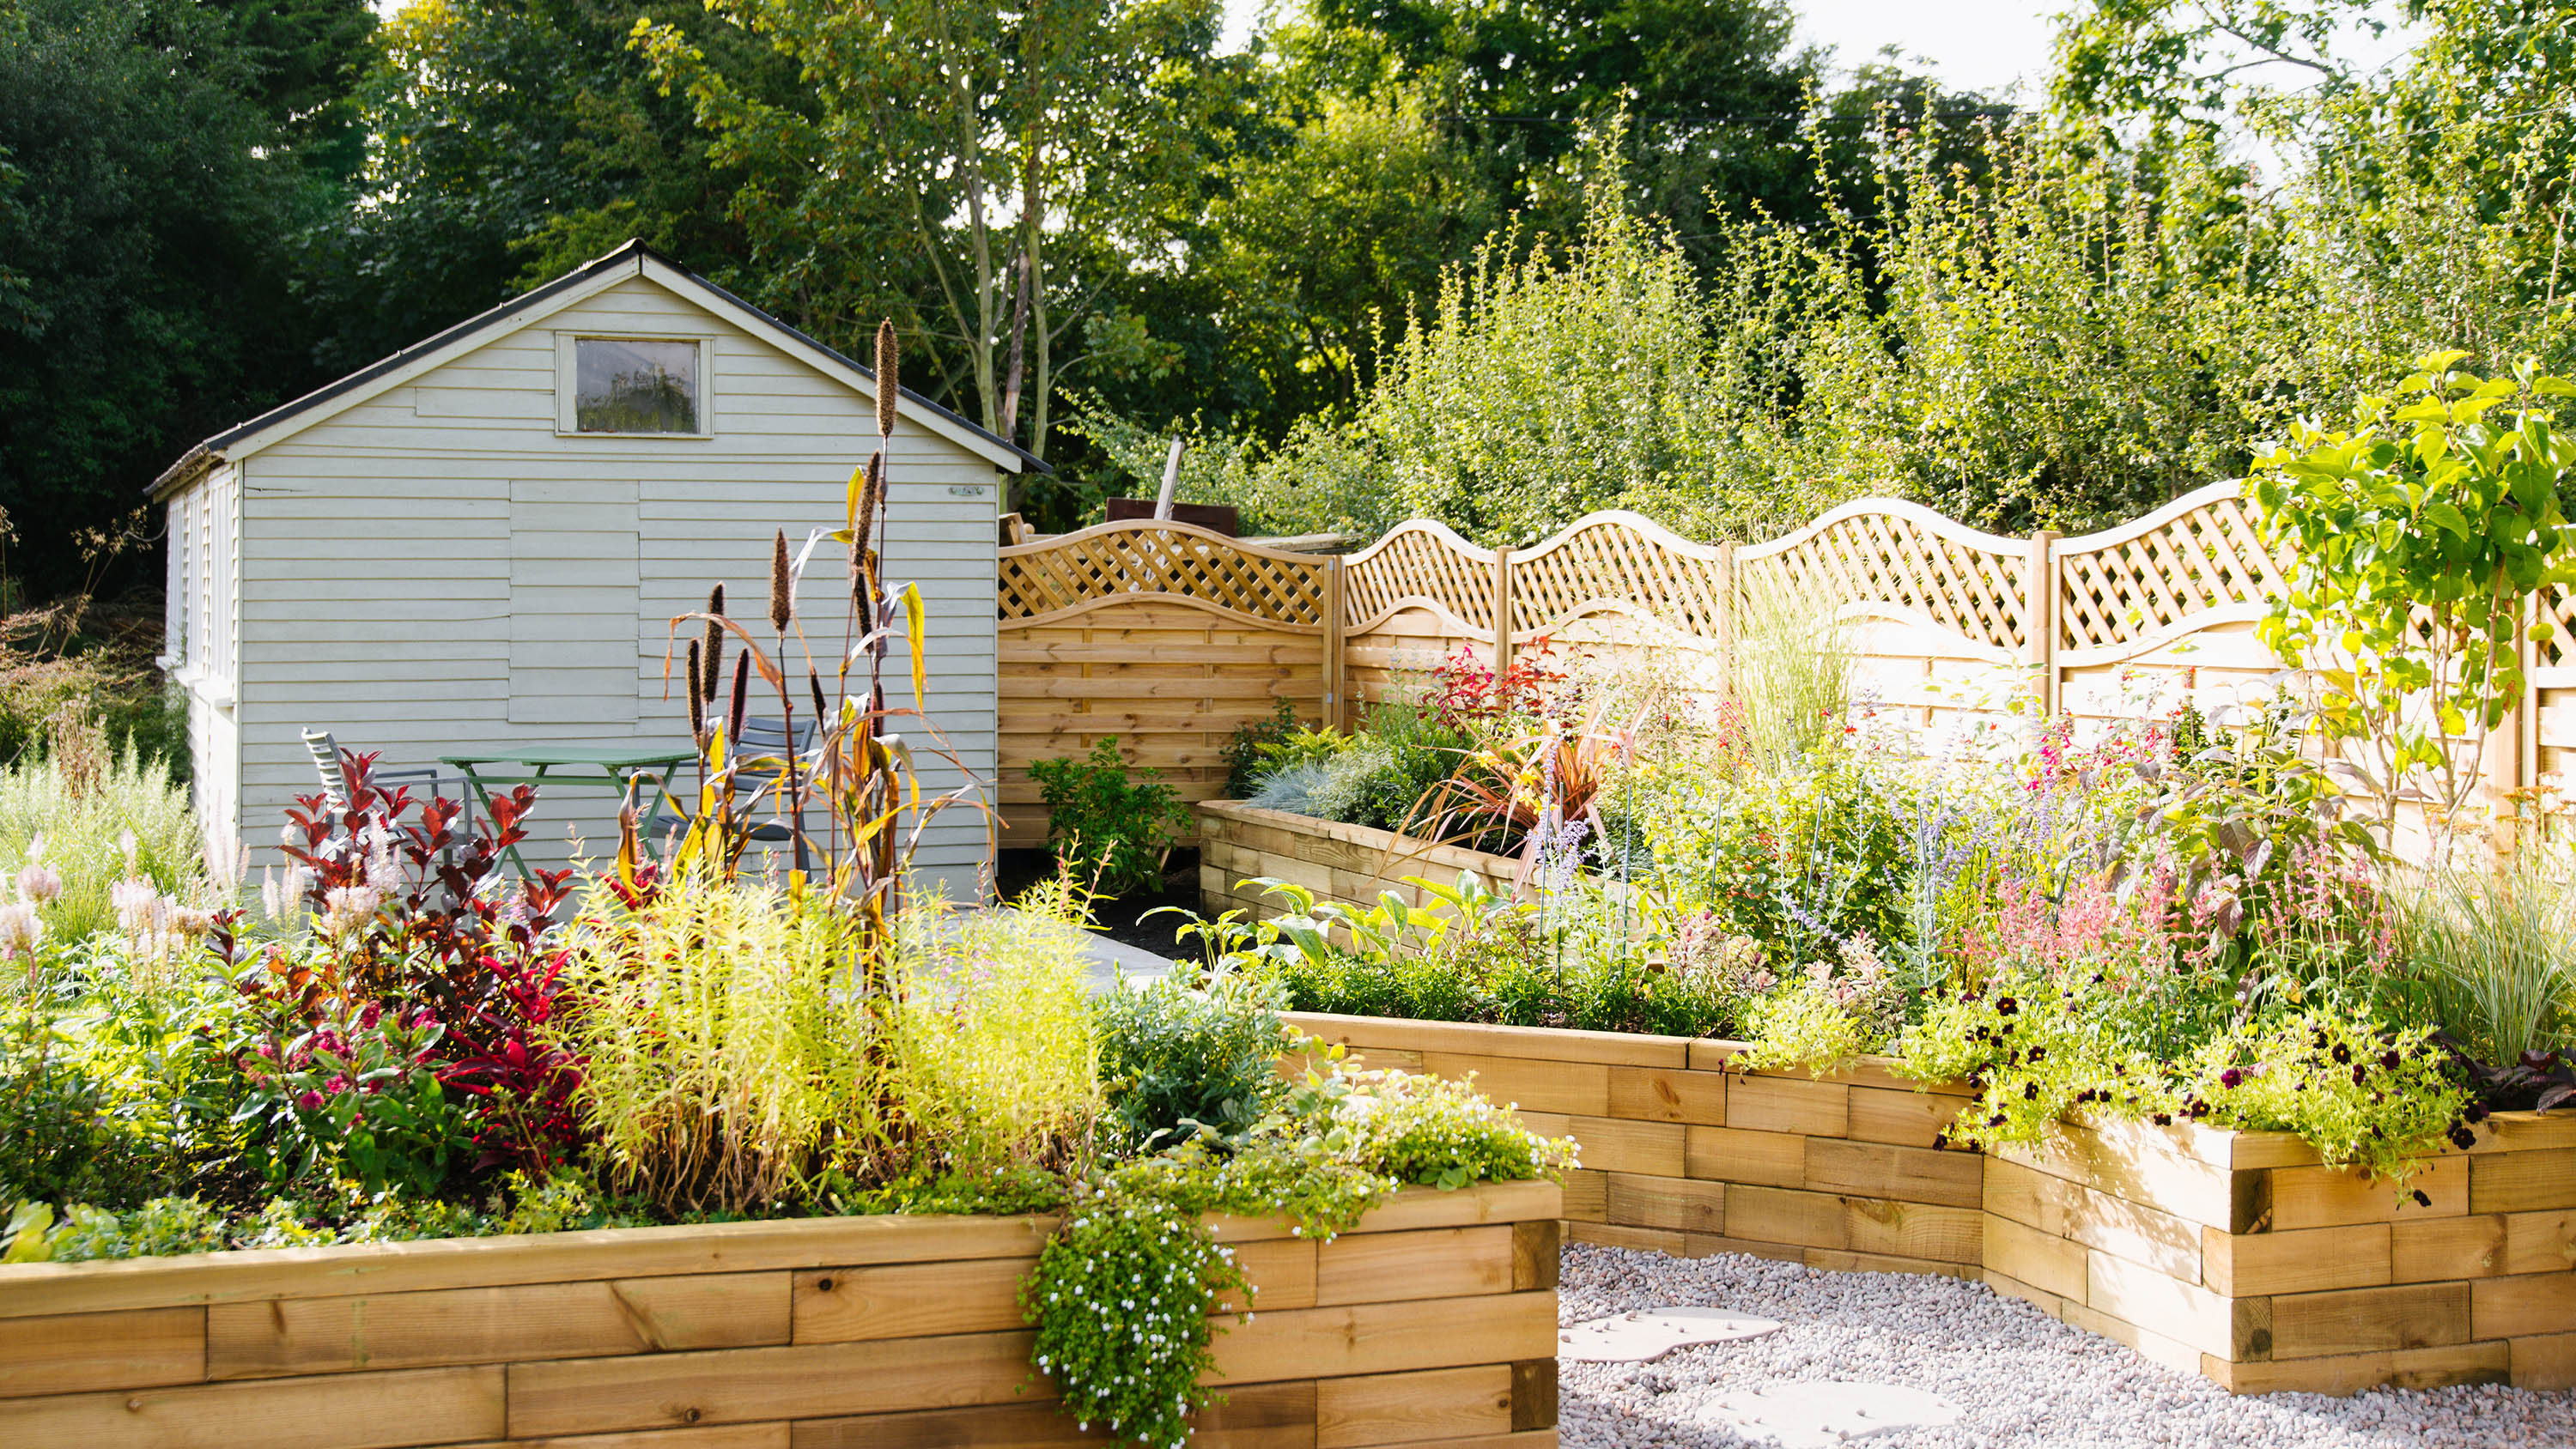 Low maintenance garden ideas 18 stylish ways to create an easy ...